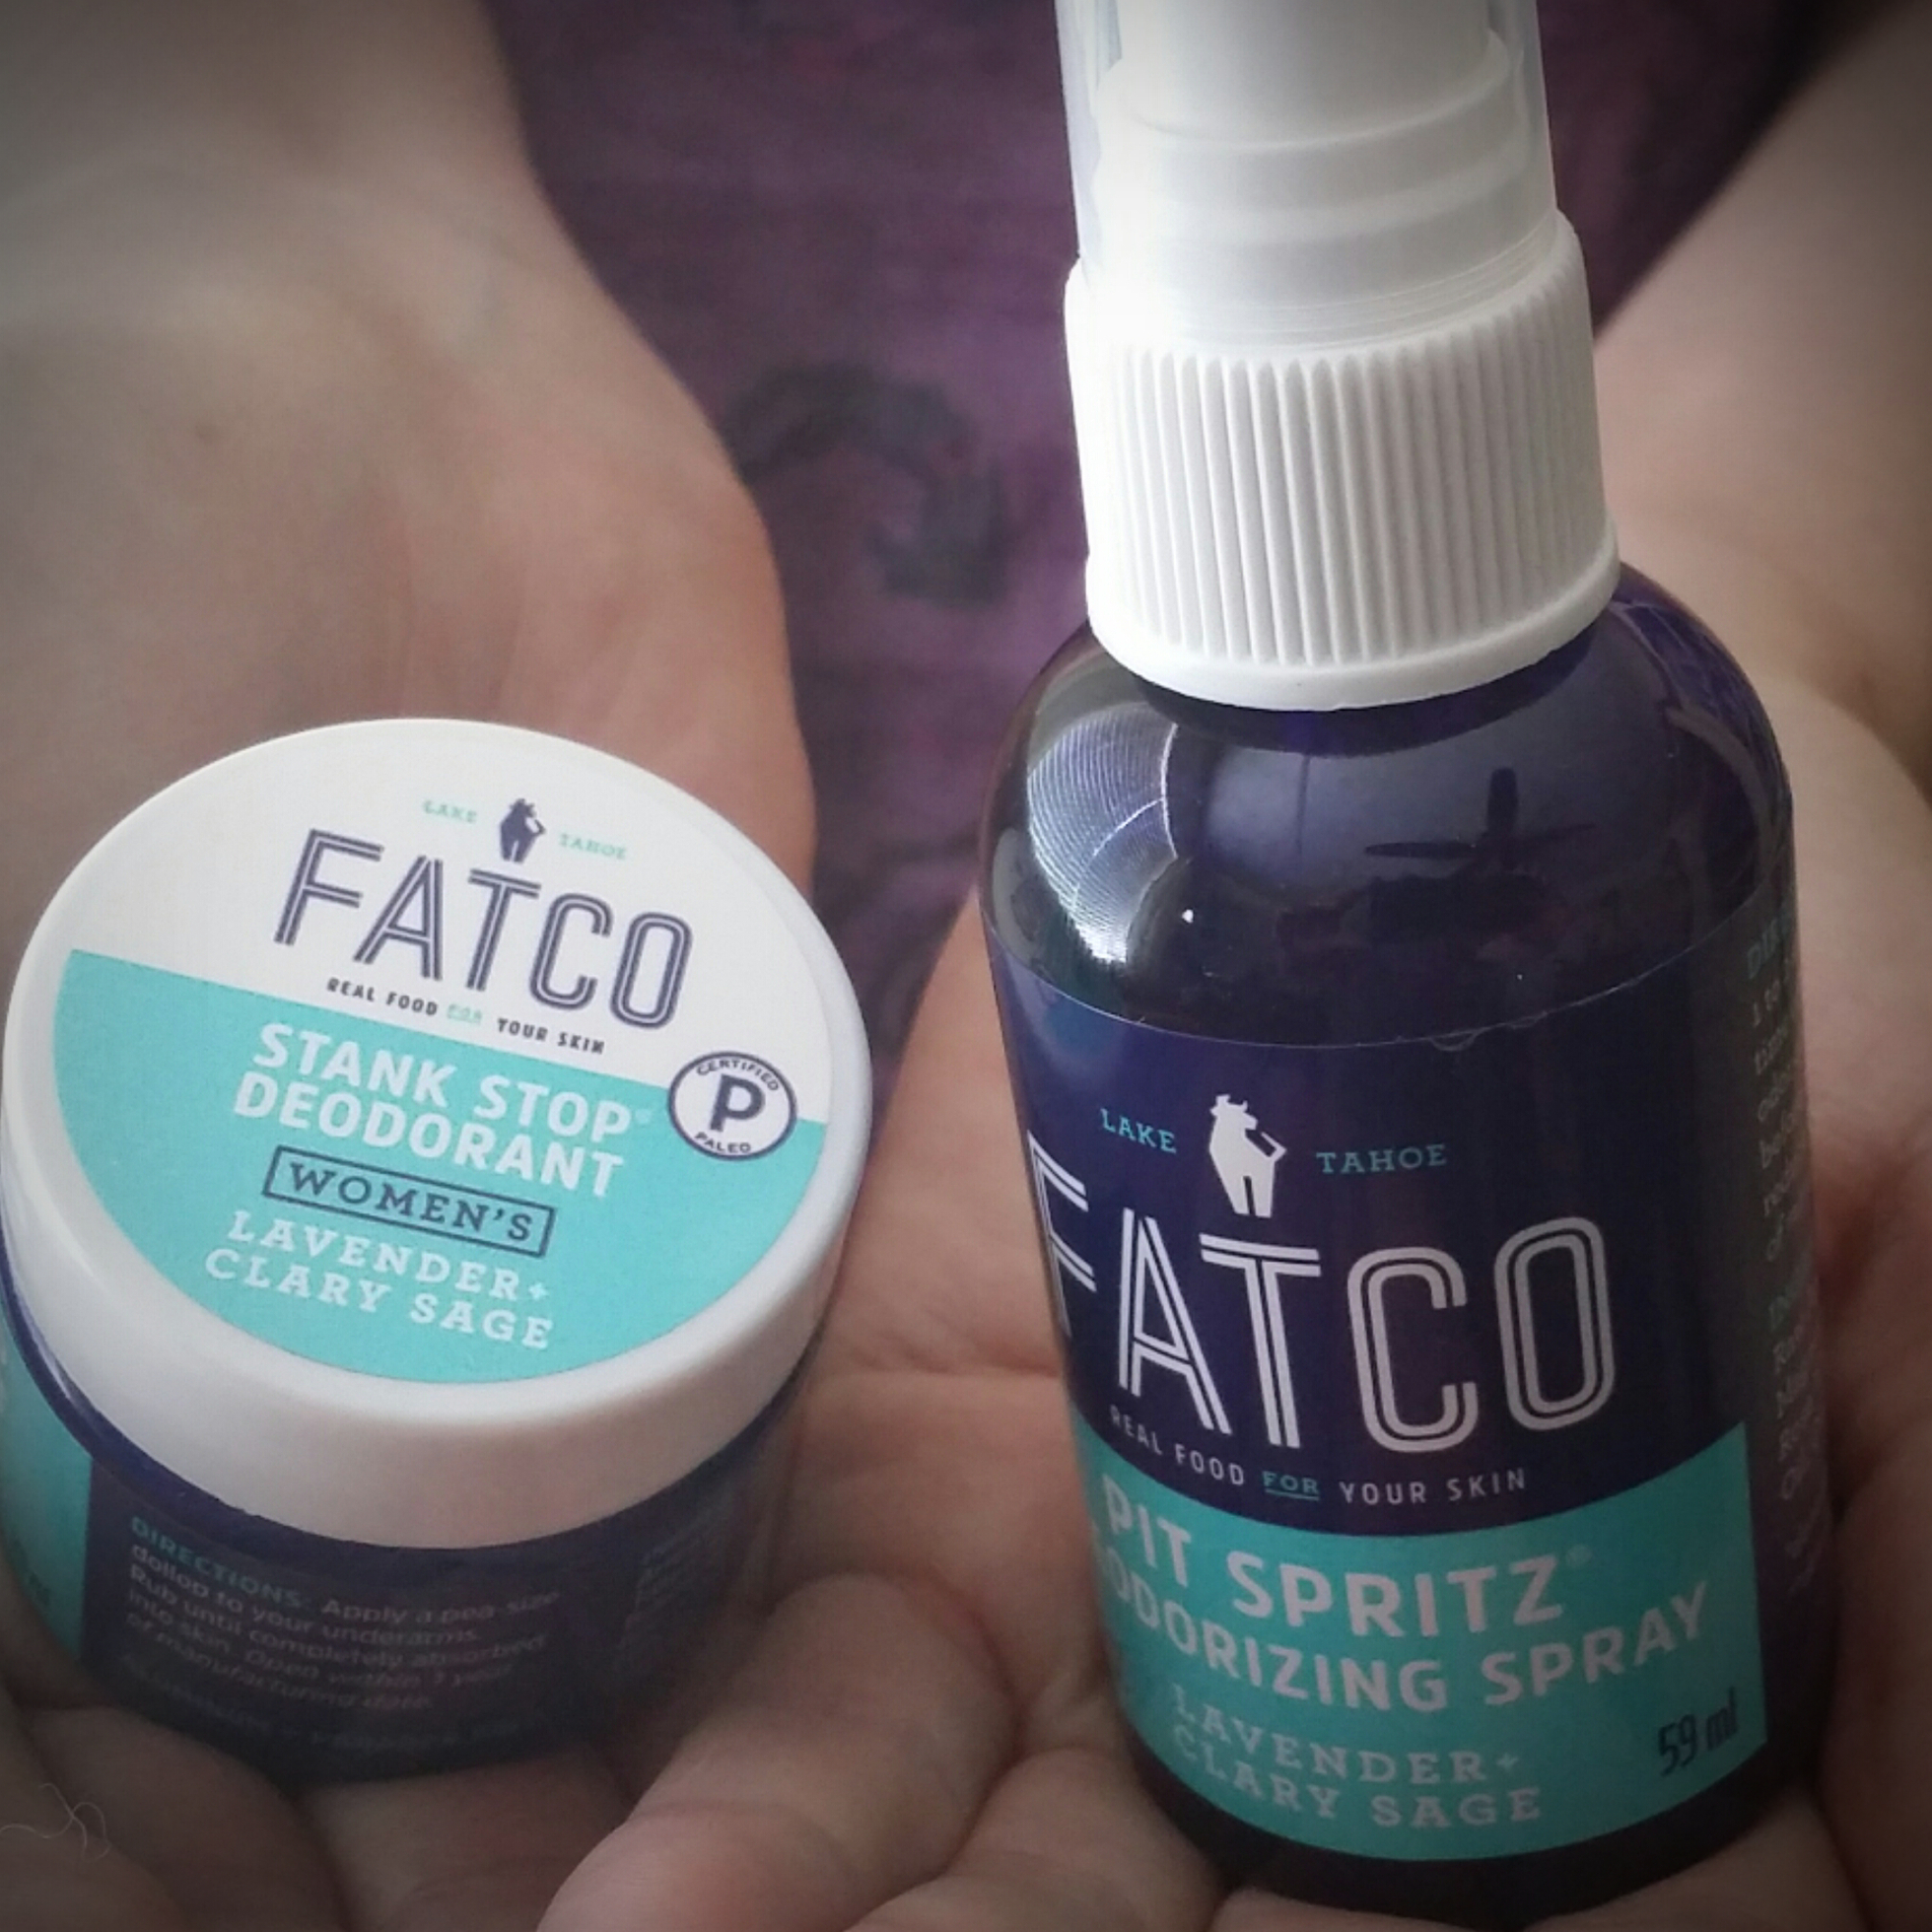 Fatco Stank Stop Deodorant